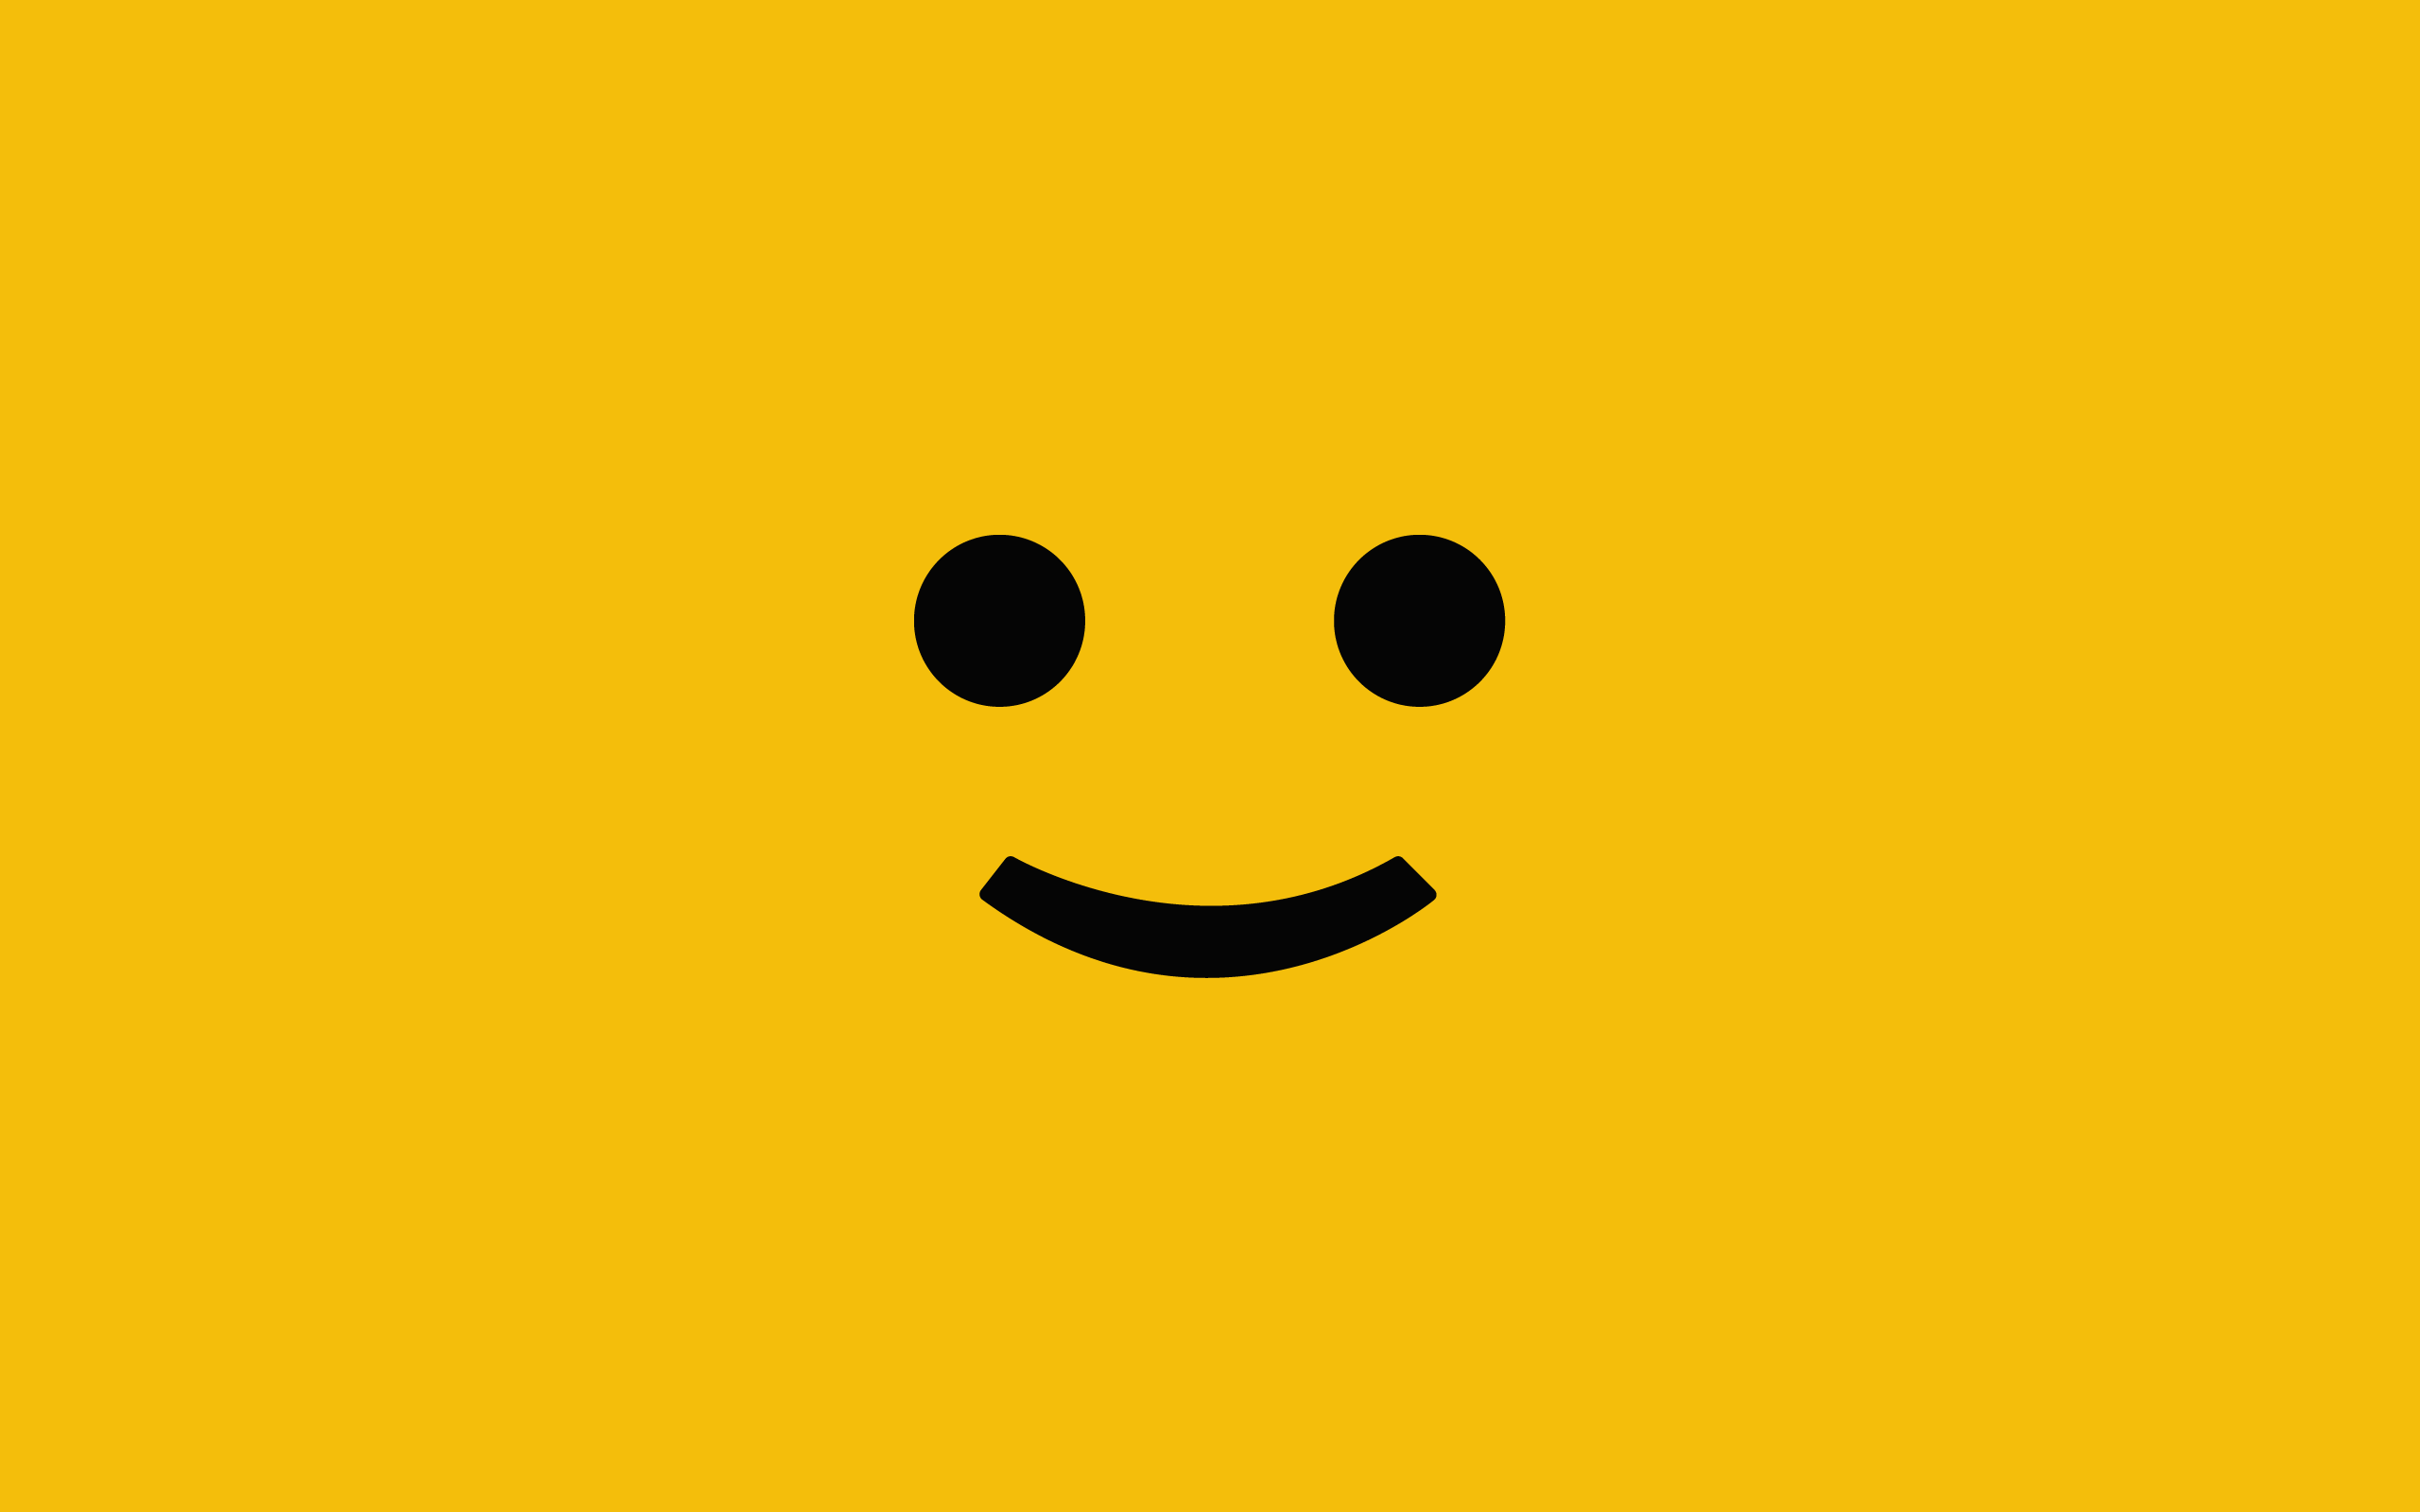 Wallpaper, illustration, minimalism, LEGO, smiley, yellow